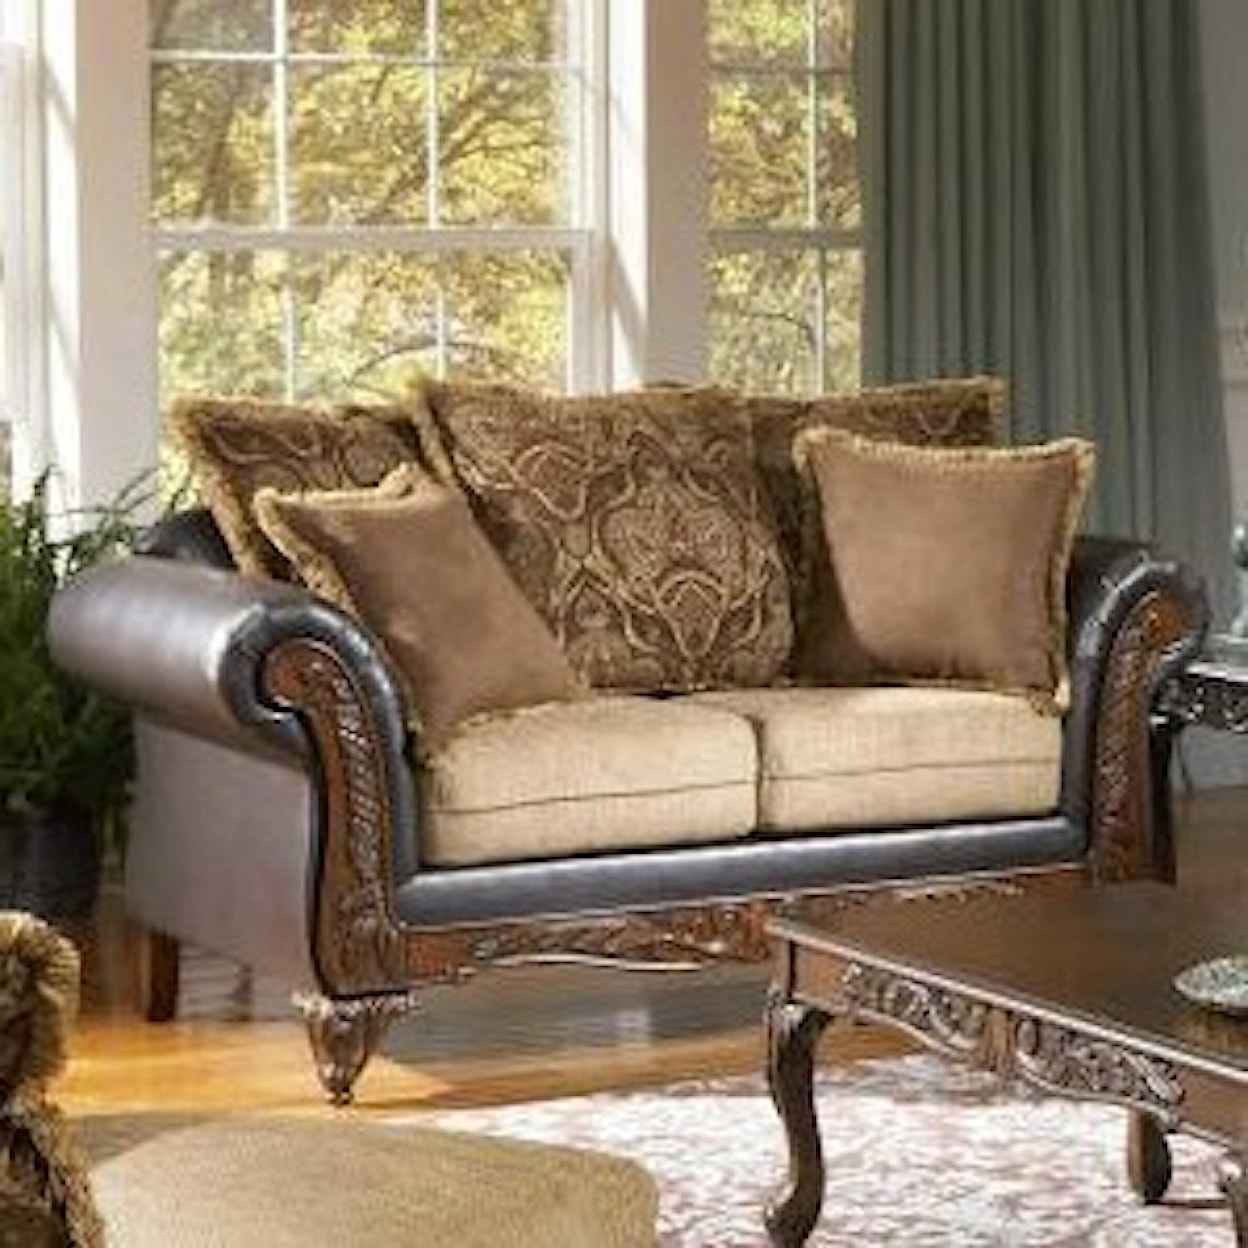 Serta Upholstery by Hughes Furniture 7900 Serta Upholstered Love Seat